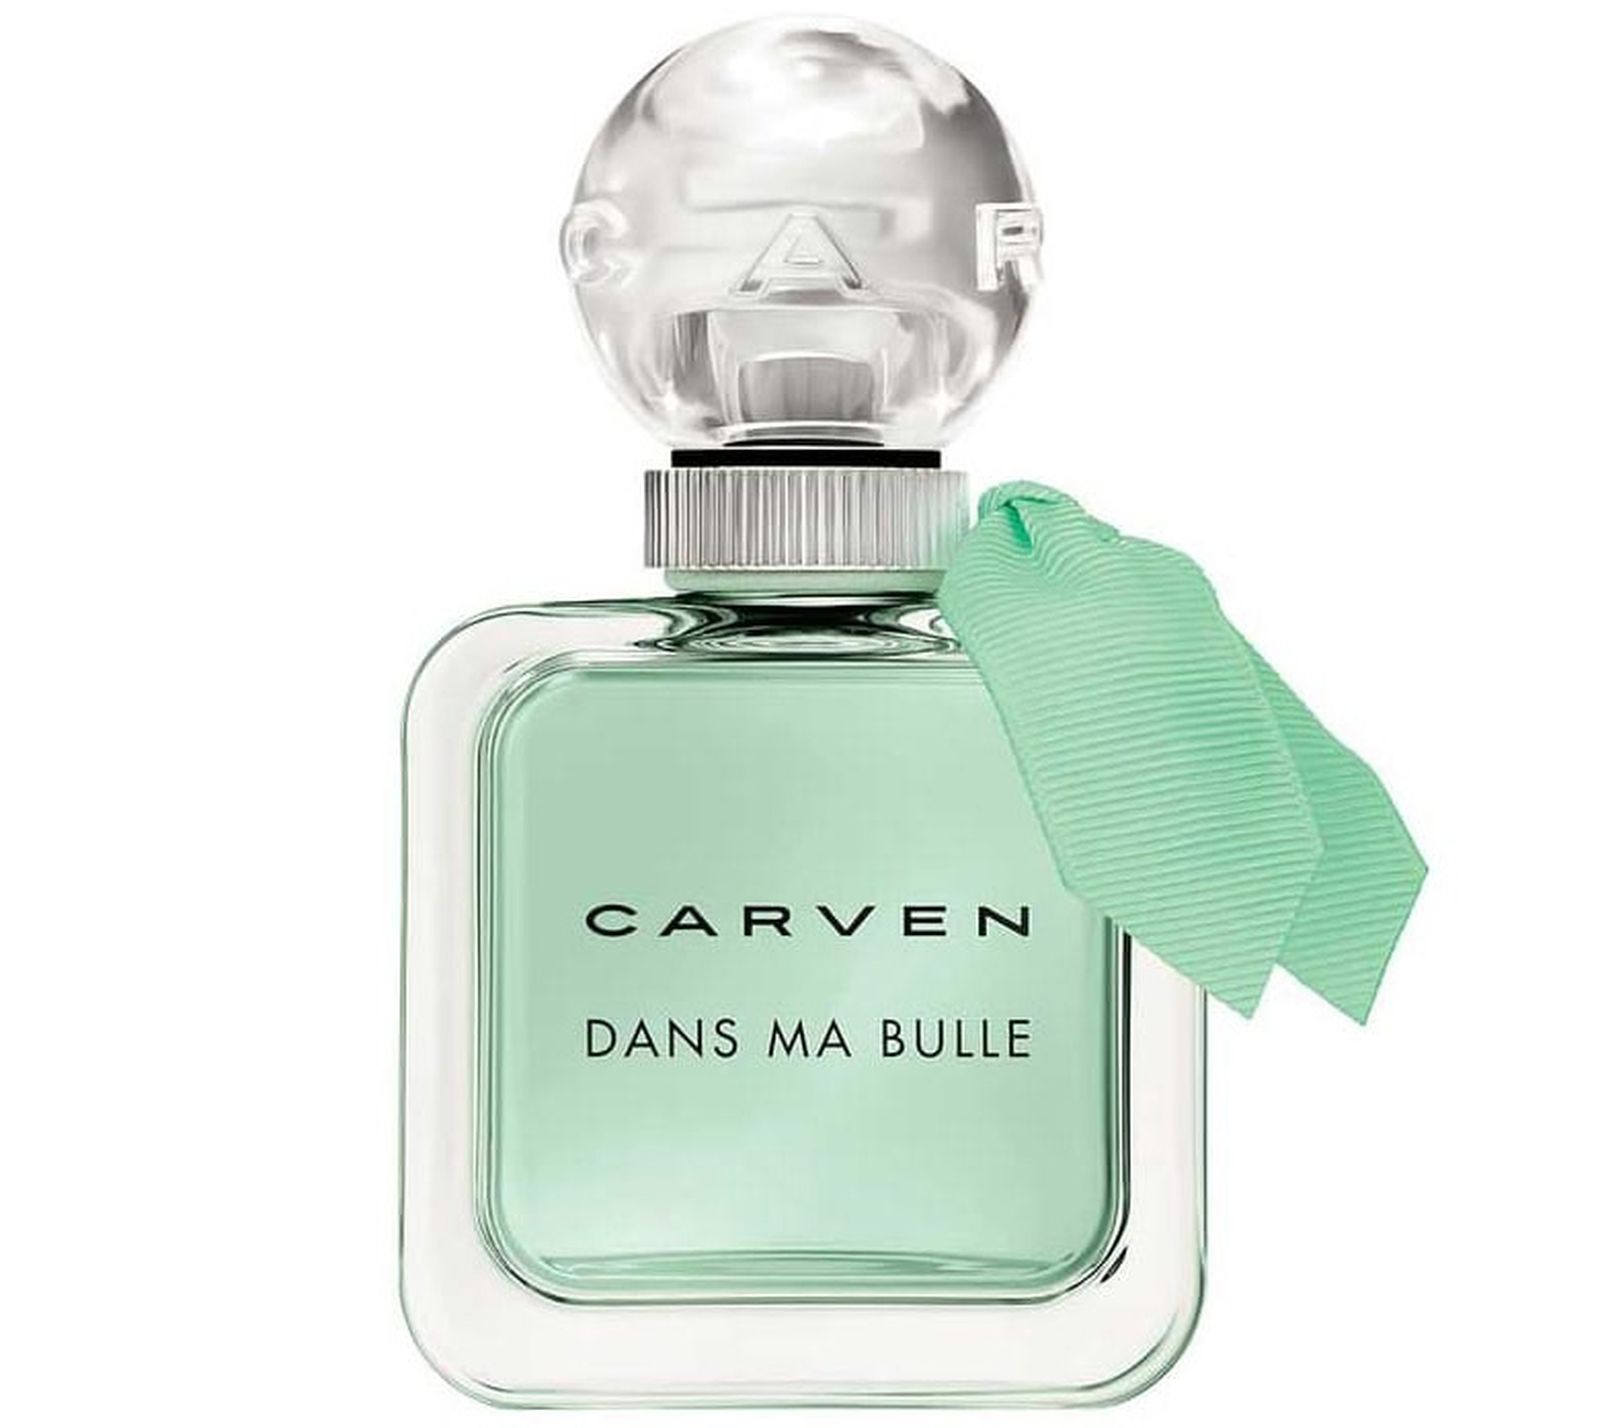 Новая легкая версия аромата Carven Dans Ma Bulle, фото 1